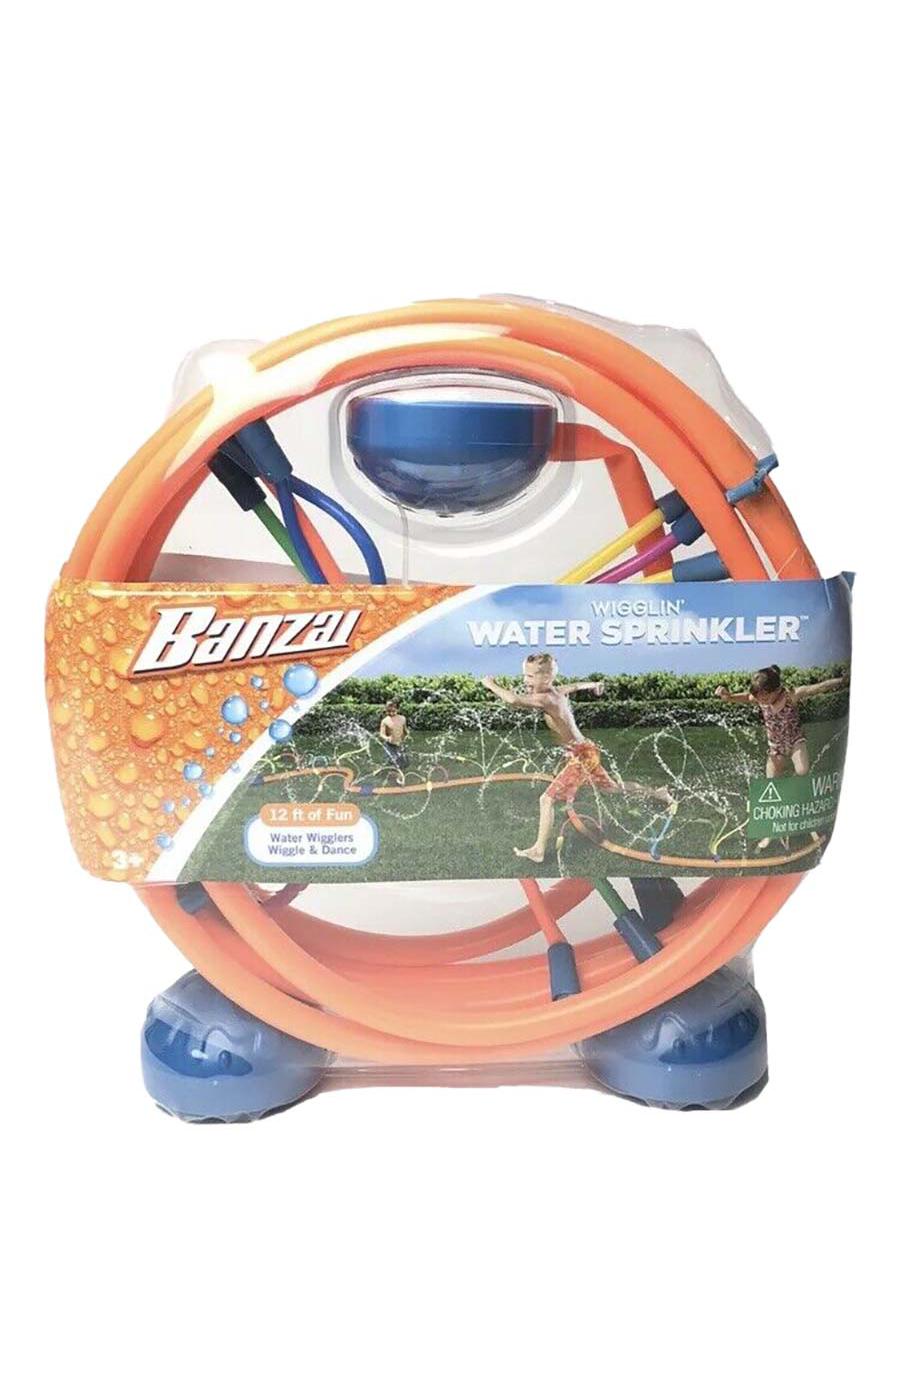 Banzai Wigglin Water Sprinkler; image 1 of 5